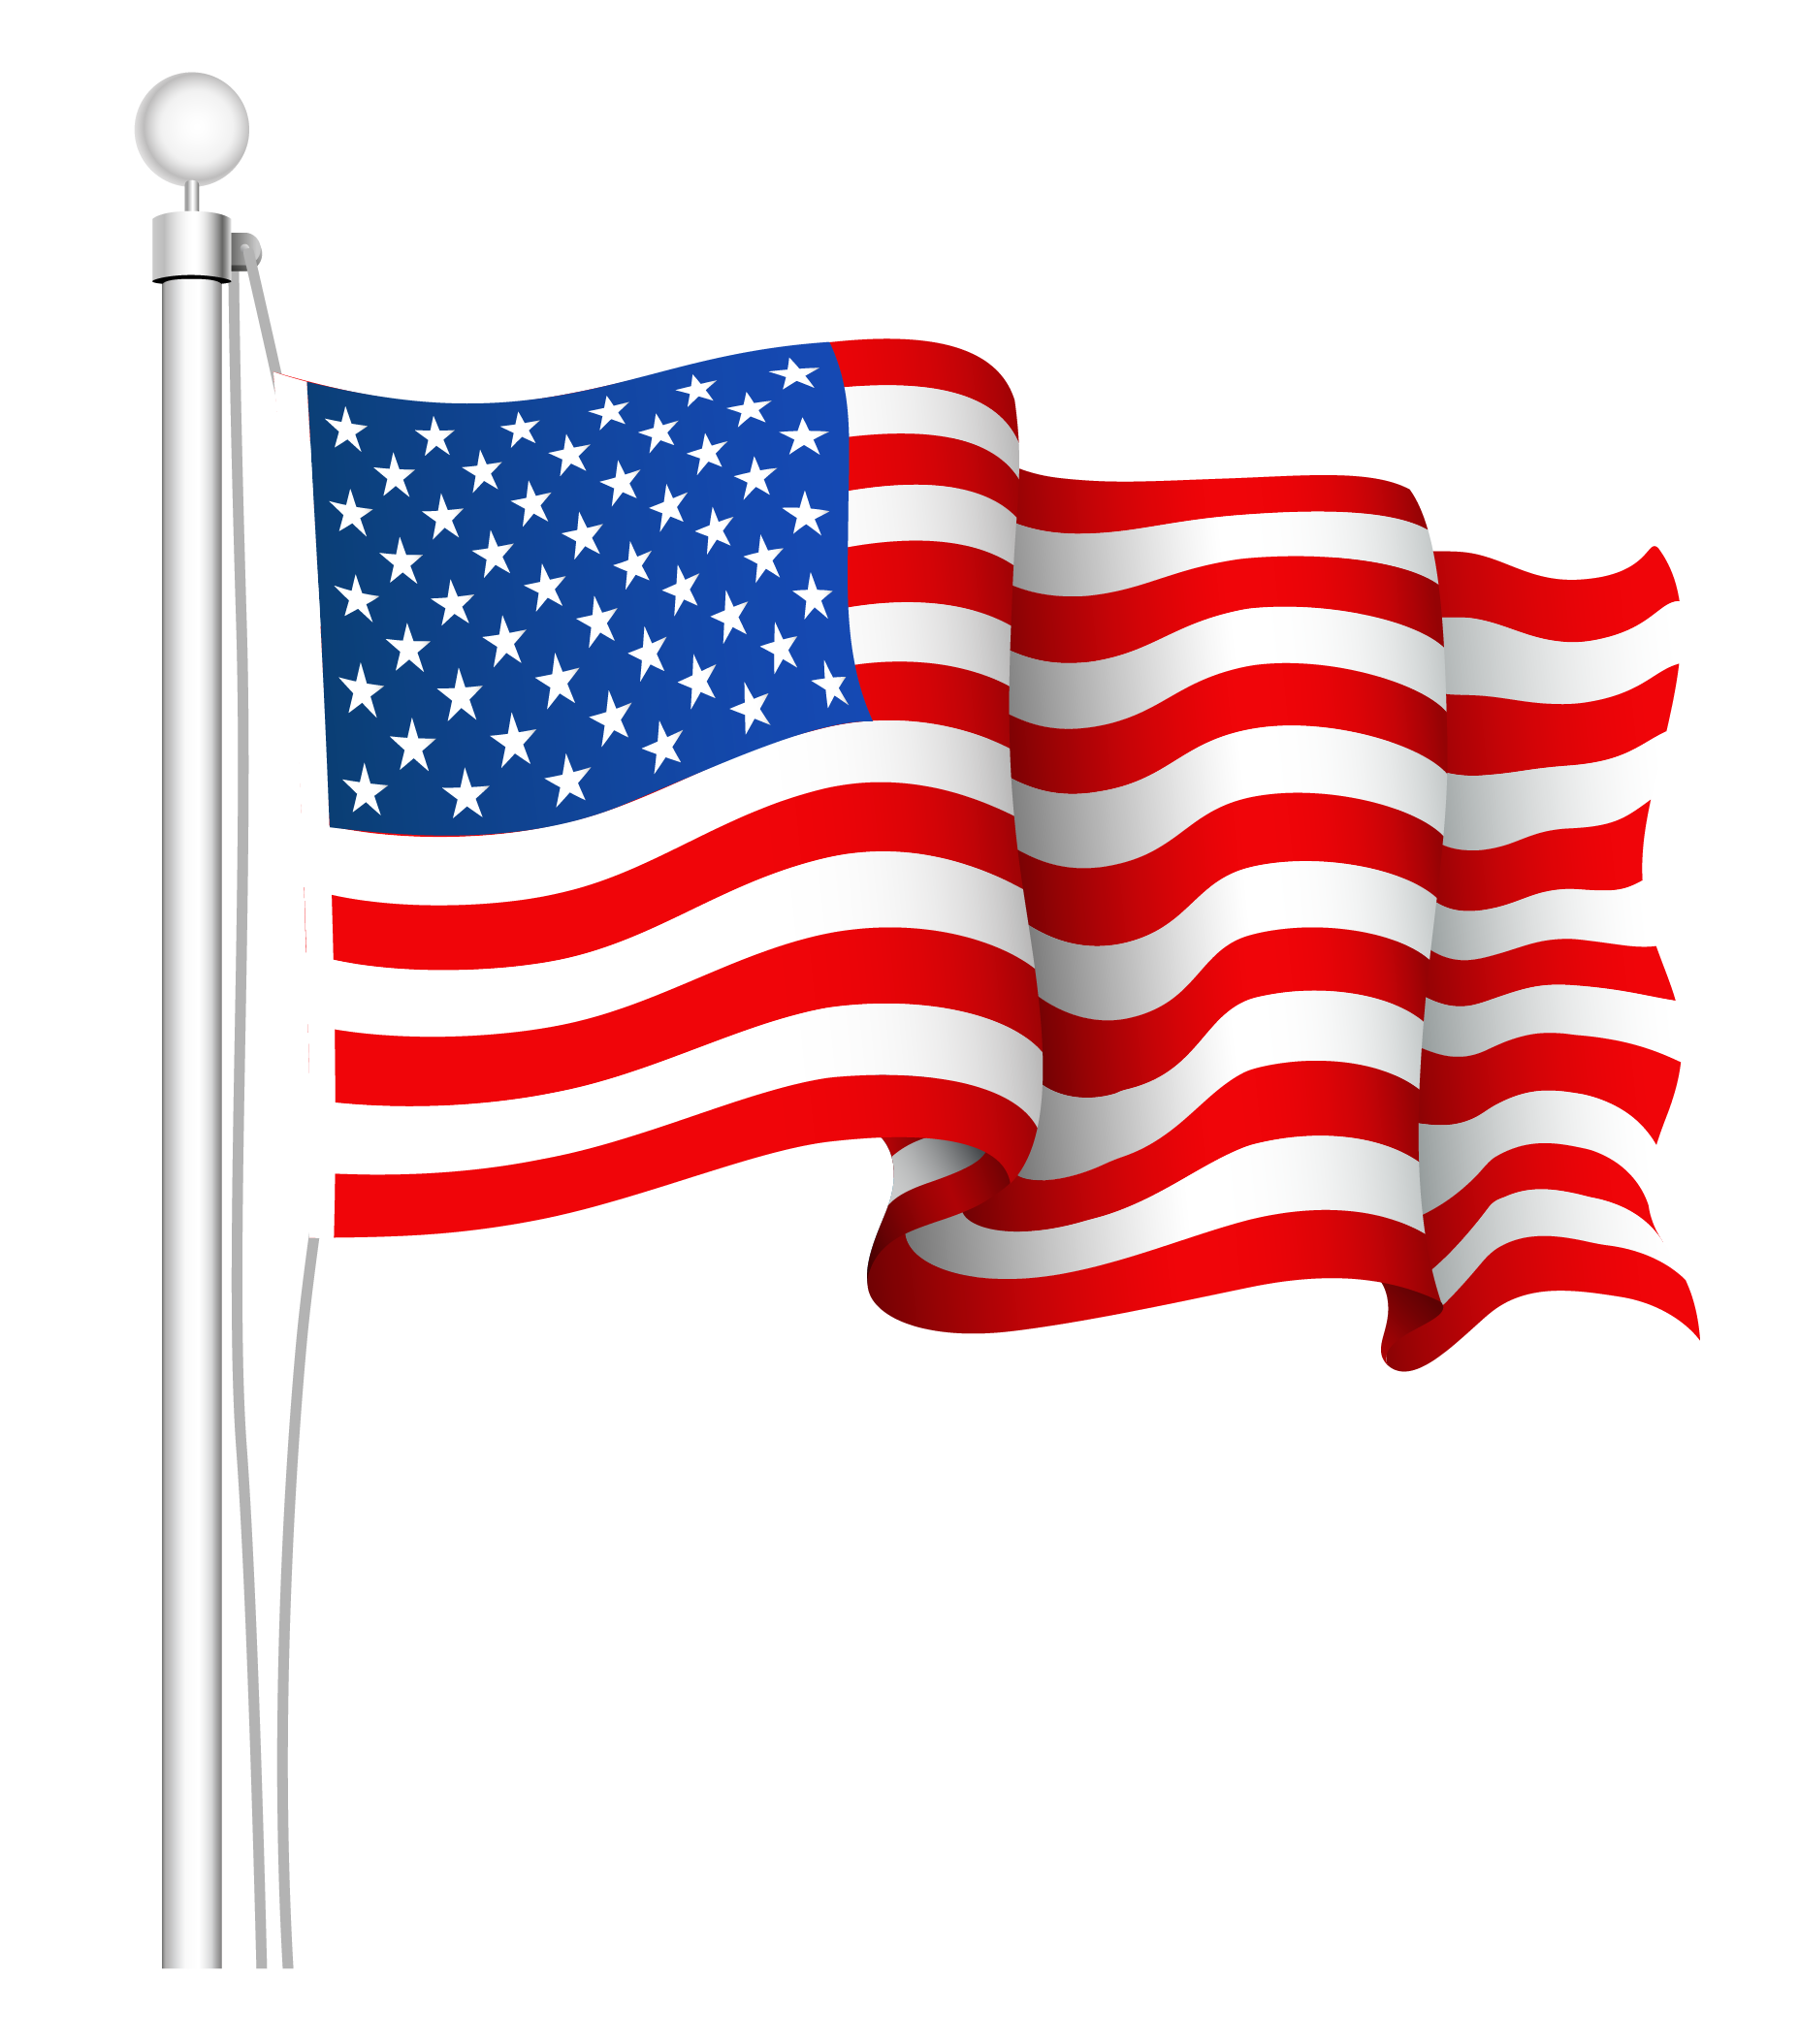 Us flag american flag background clipart kid 2 - Clipartix